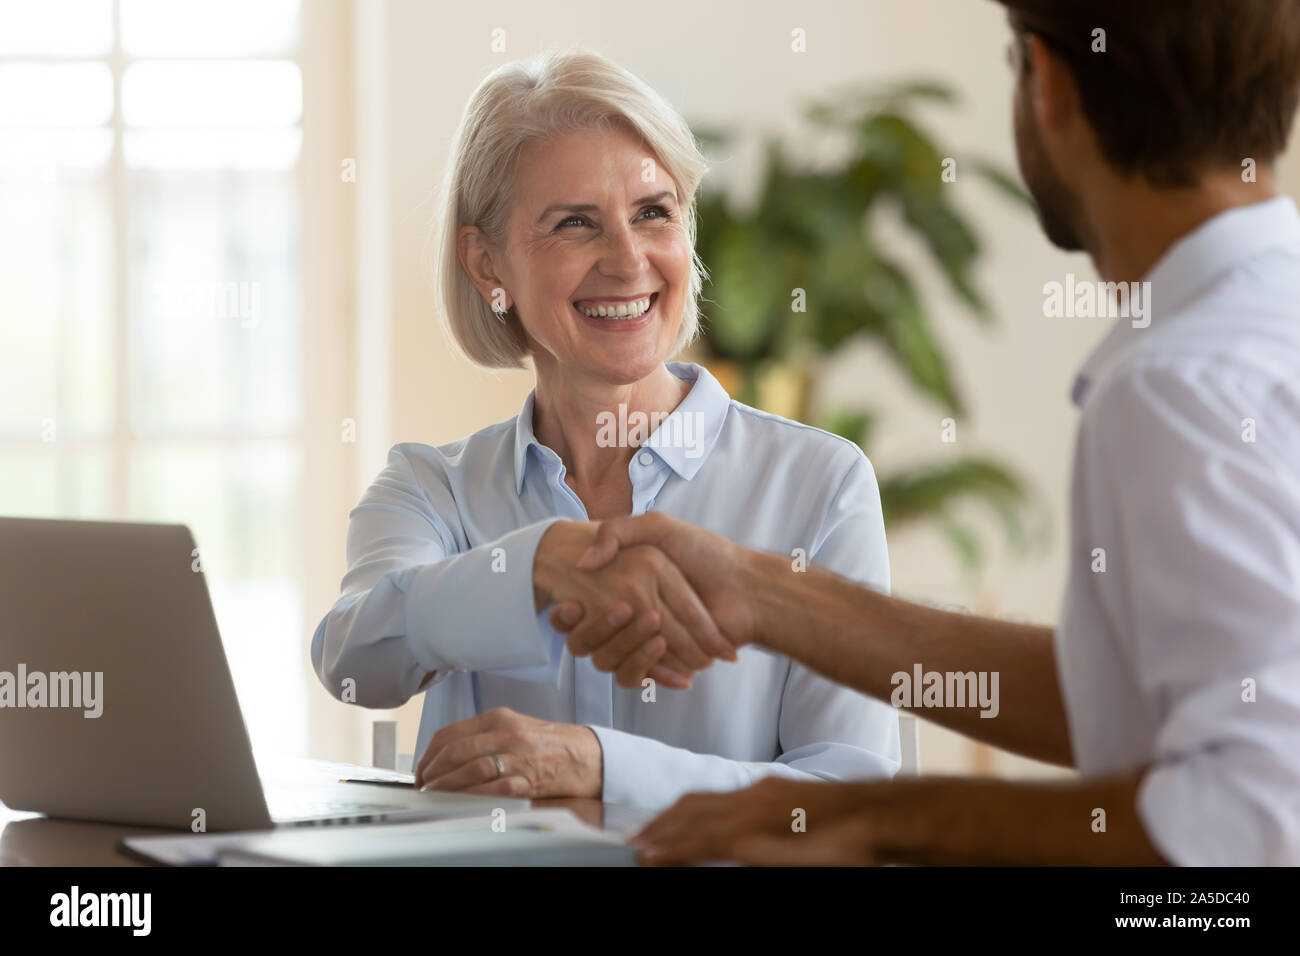 Smiling mature saleswoman handshake businessman client customer at business meeting Stock Photo